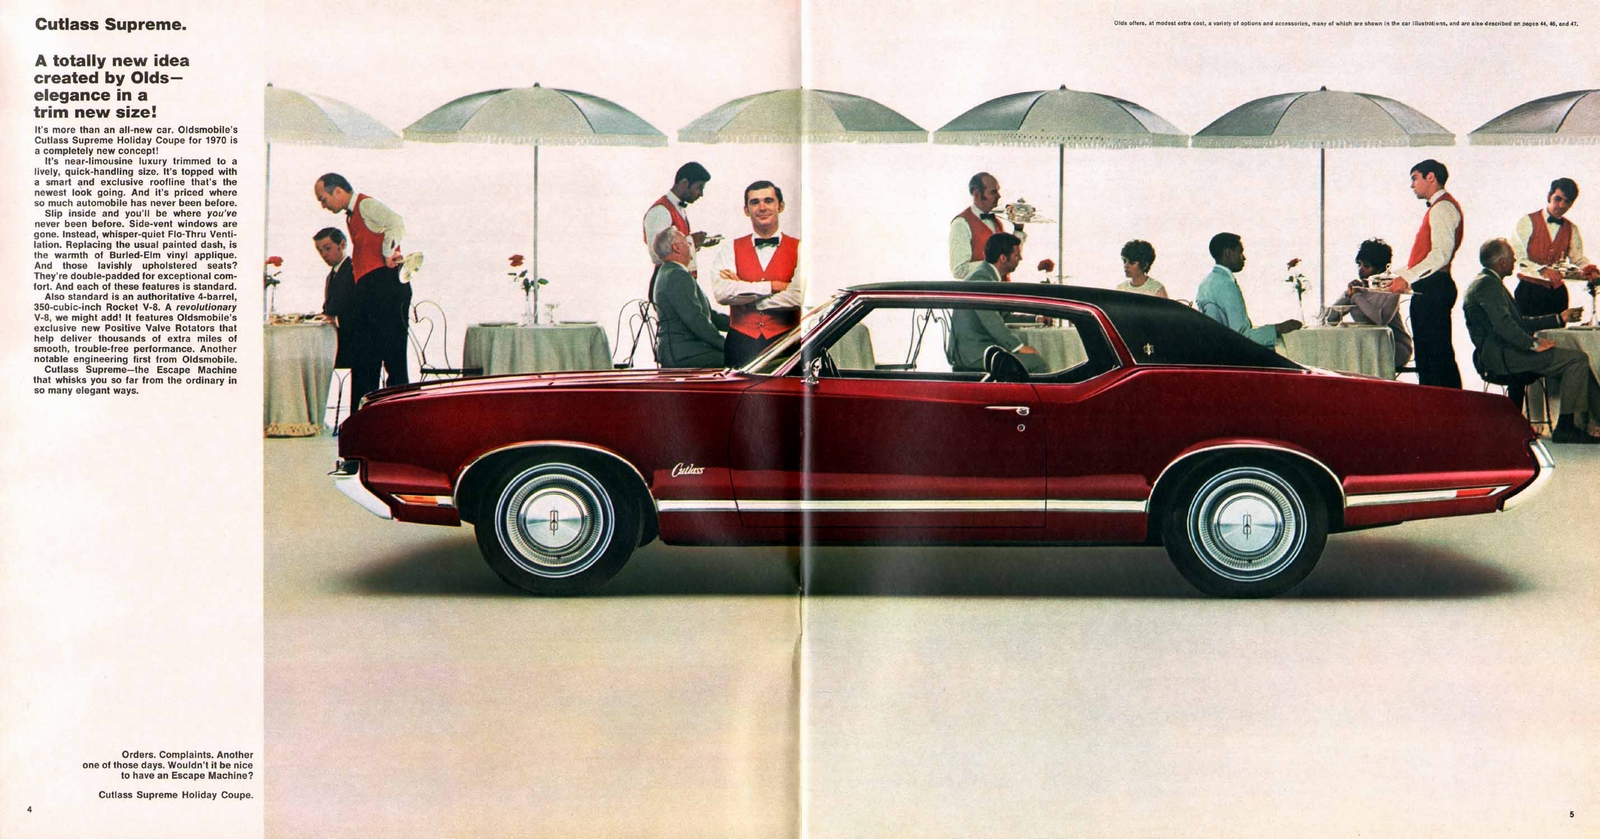 n_1970 Oldsmobile Full Line Prestige (08-69)-04-05.jpg